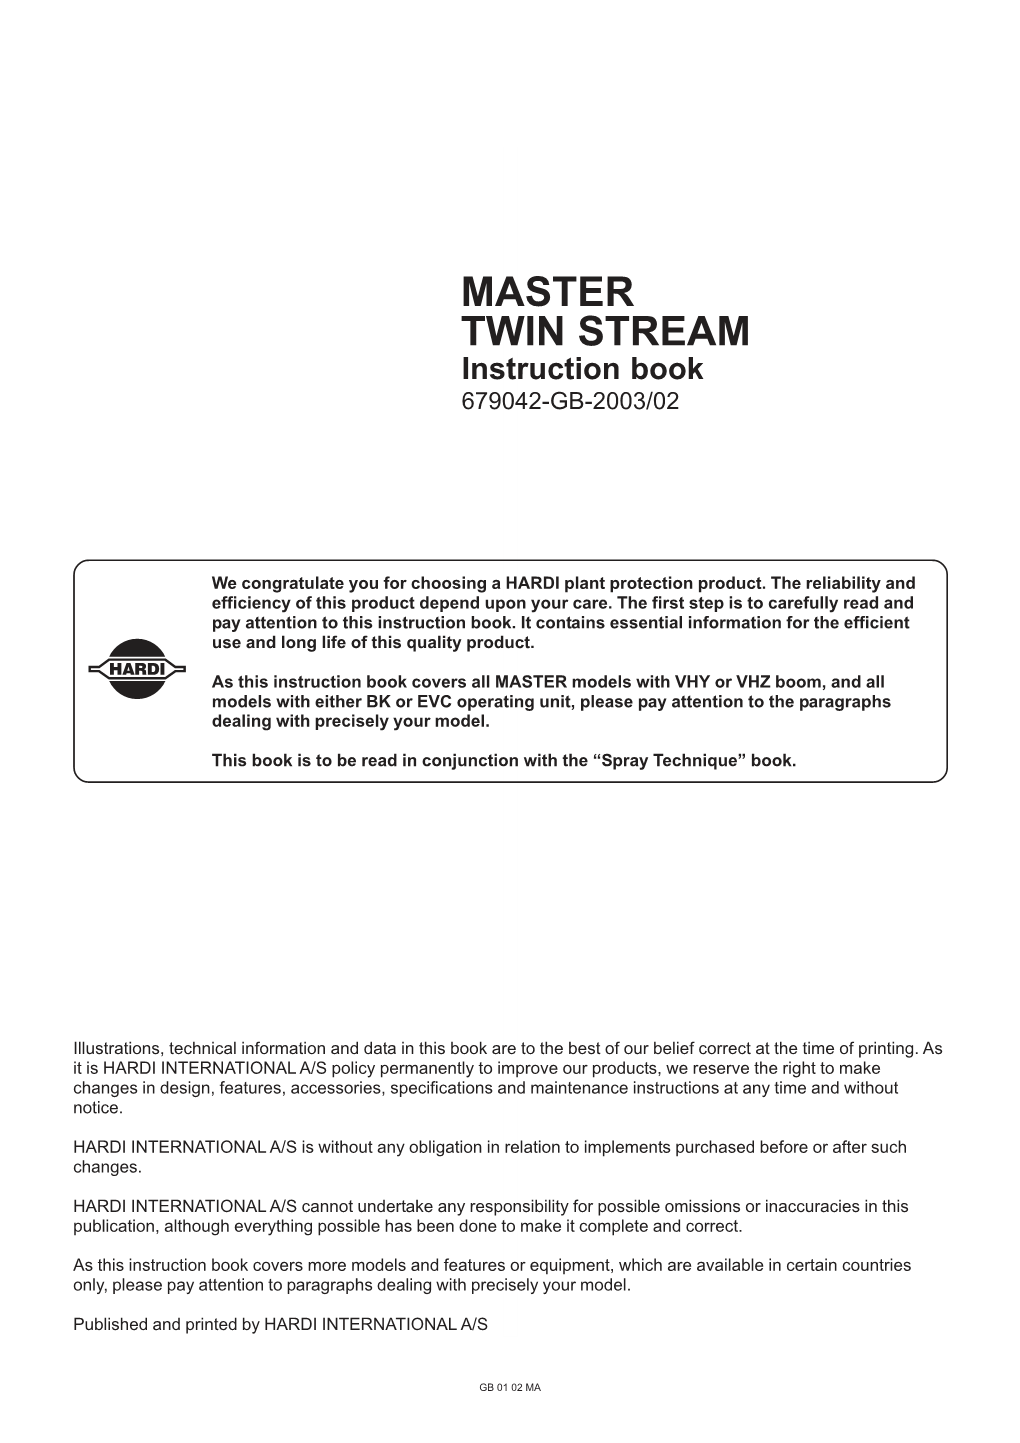 MASTER TWIN STREAM Instruction Book 679042-GB-2003/02